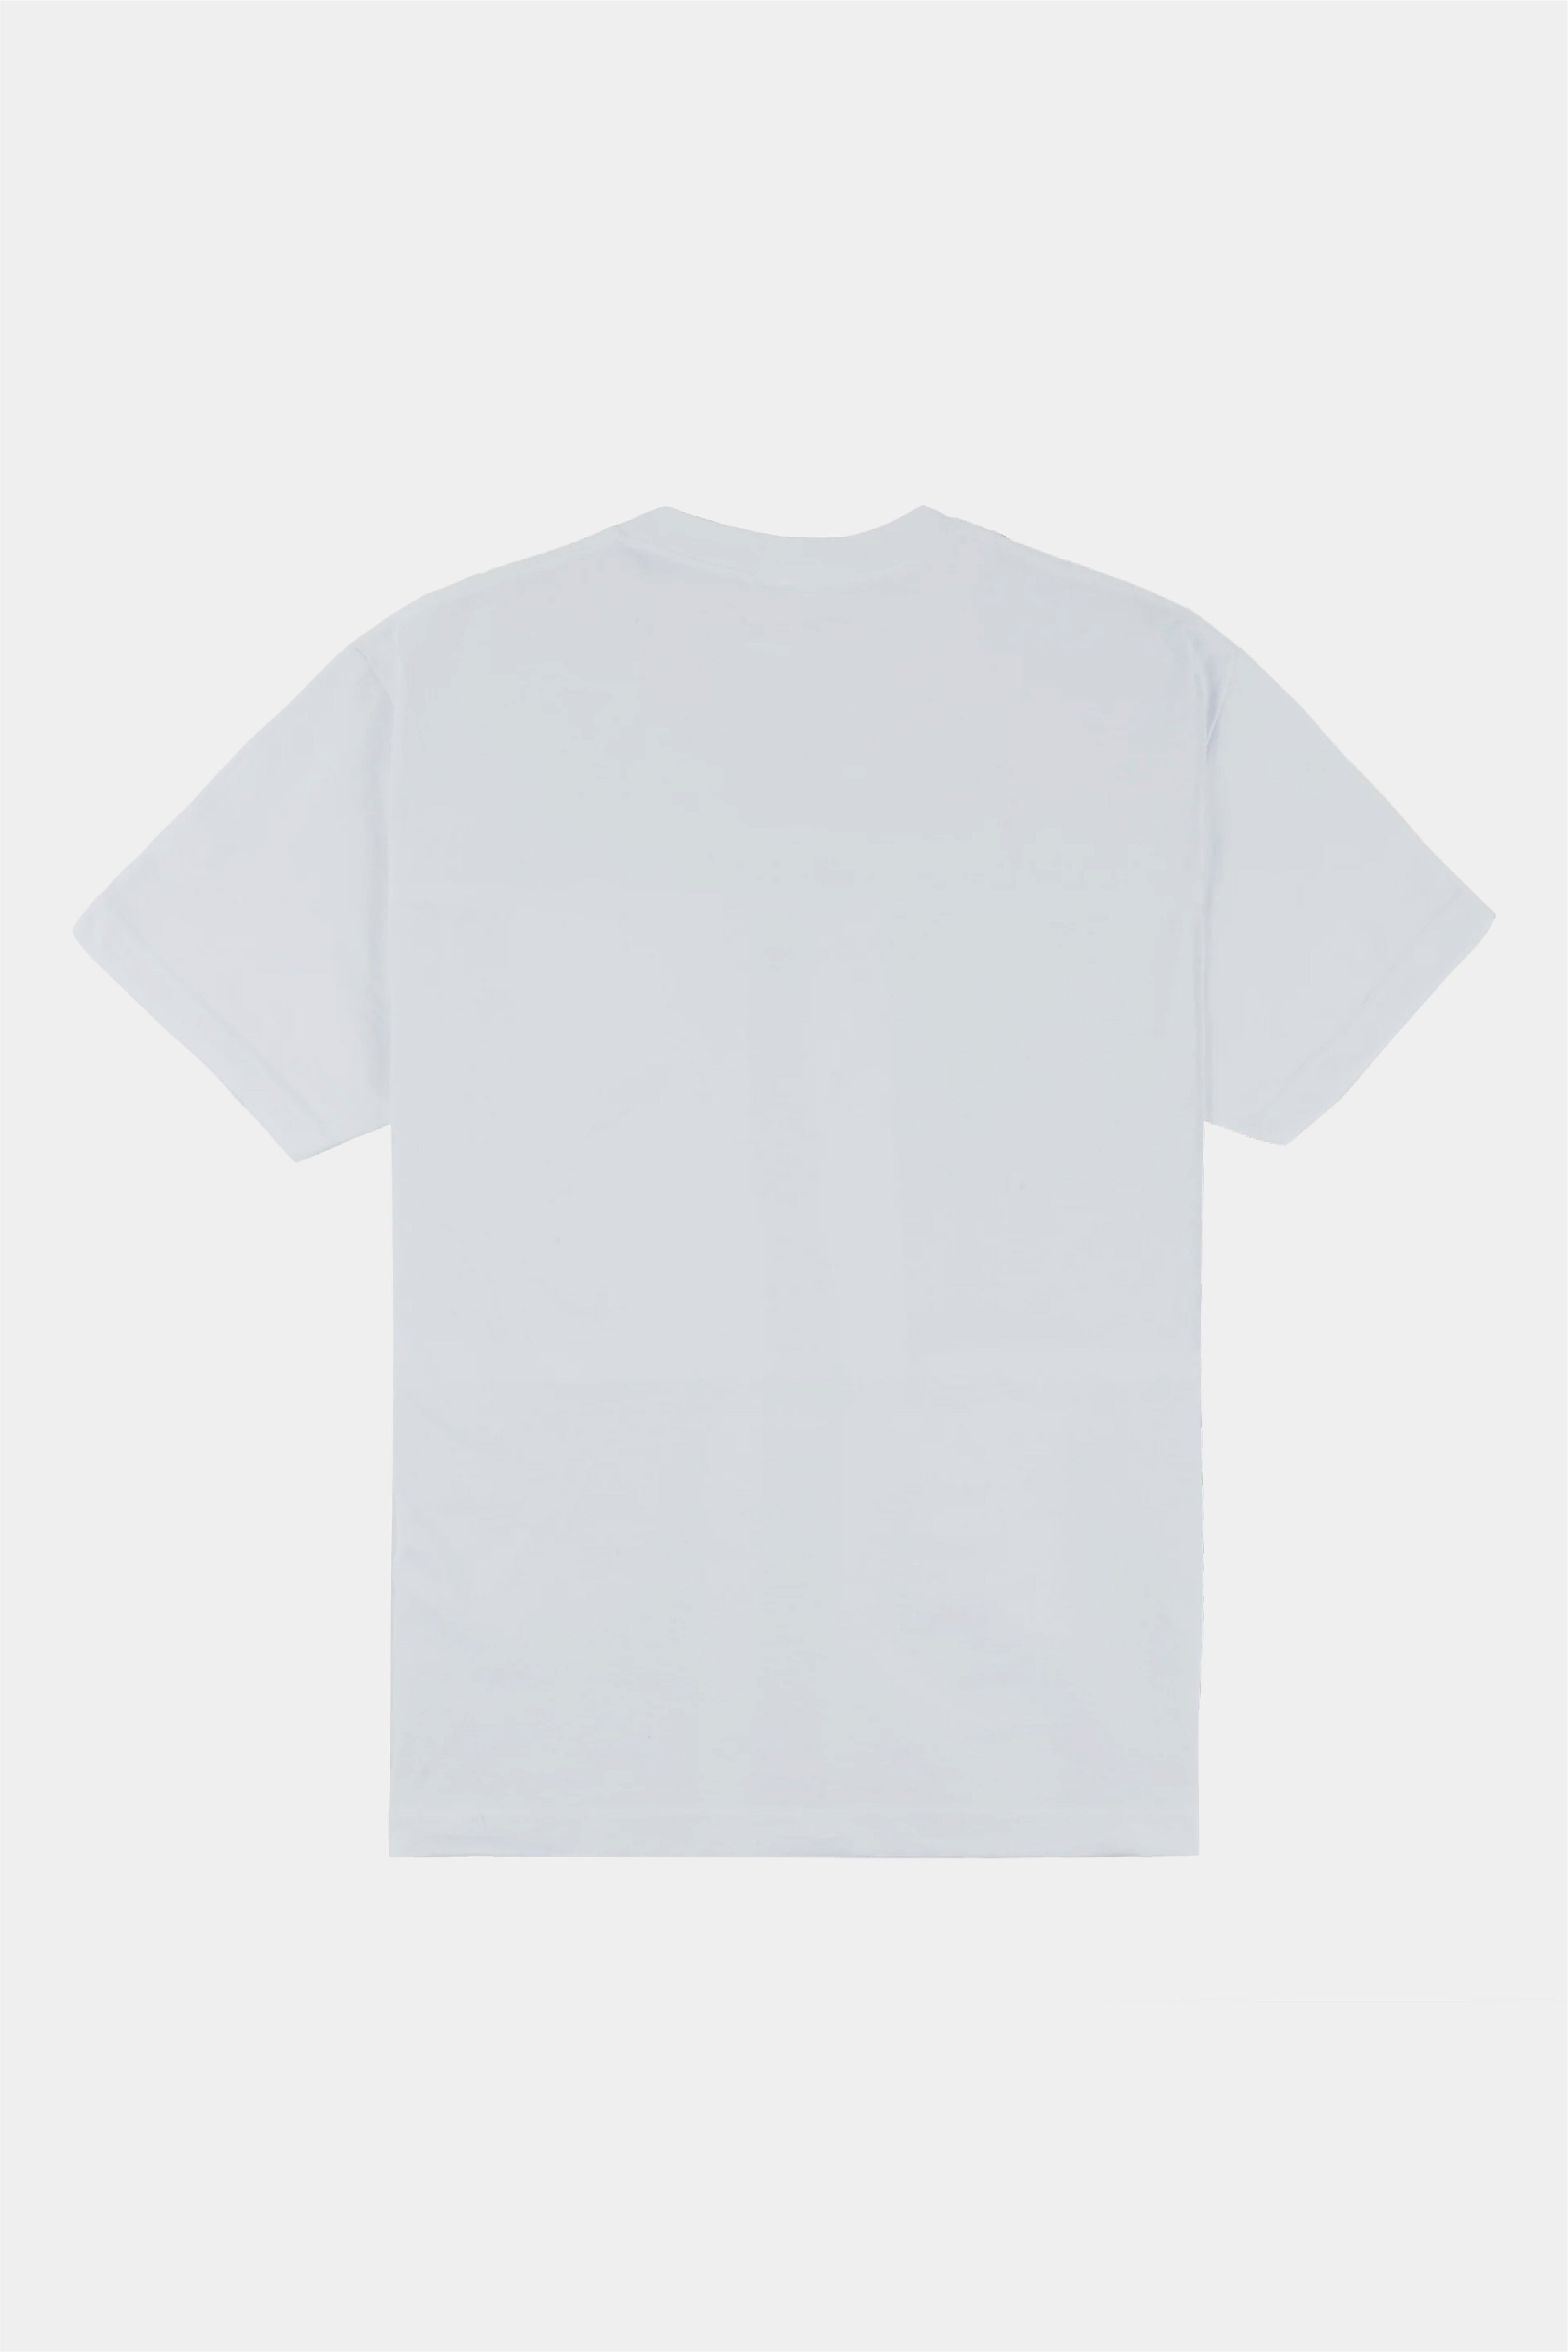 Selectshop FRAME - CLASSIC Fuck You Tee T-Shirts Dubai